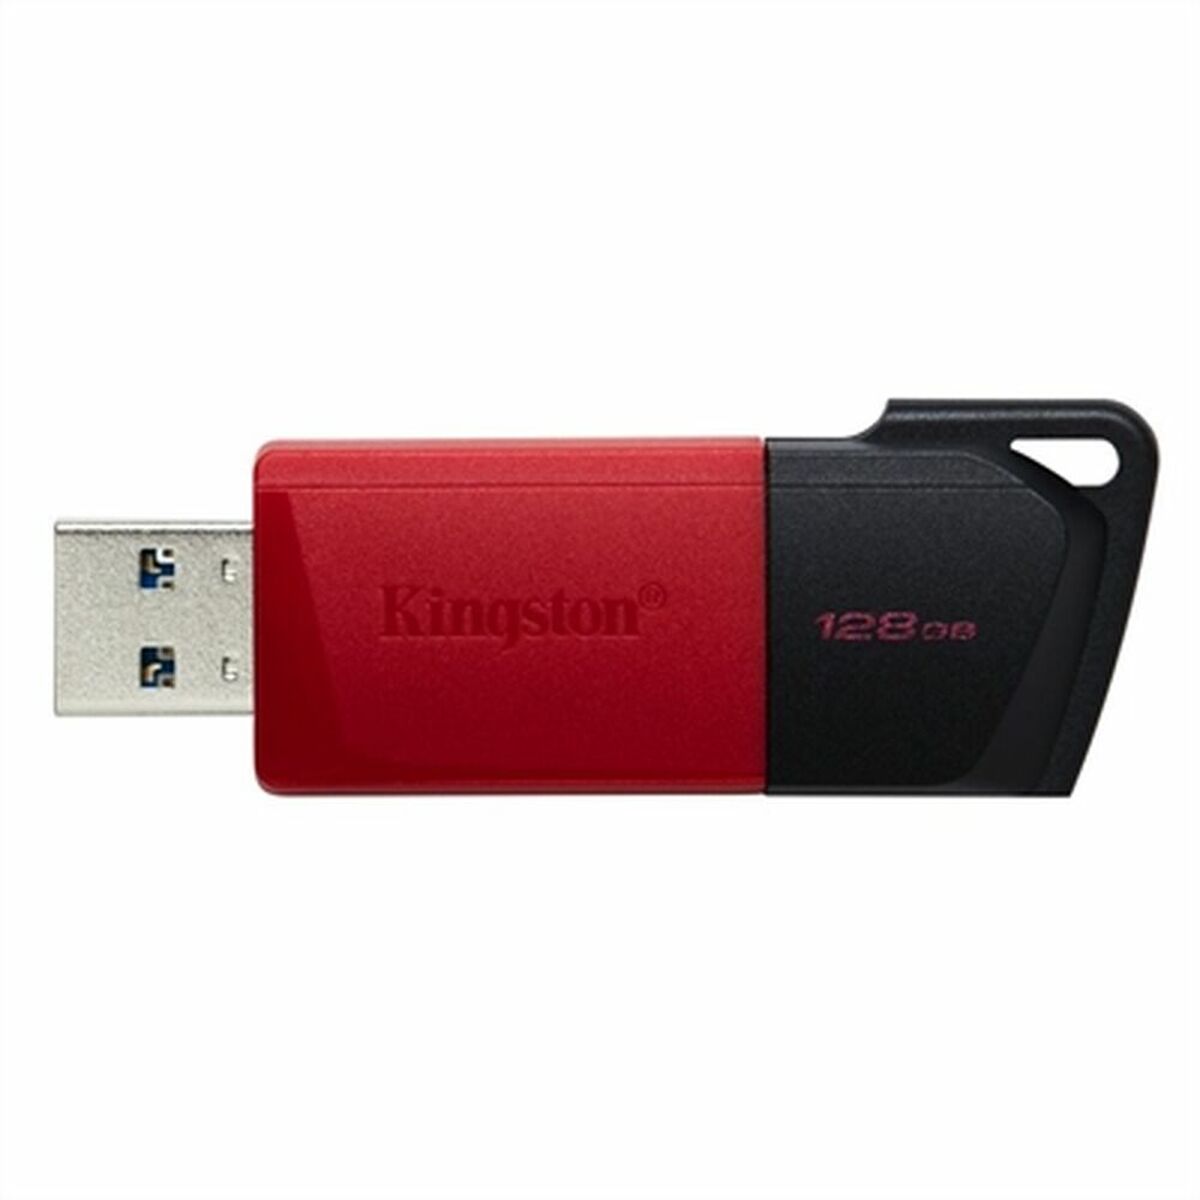 Memorie USB Kingston DTXM 128 GB 128 GB